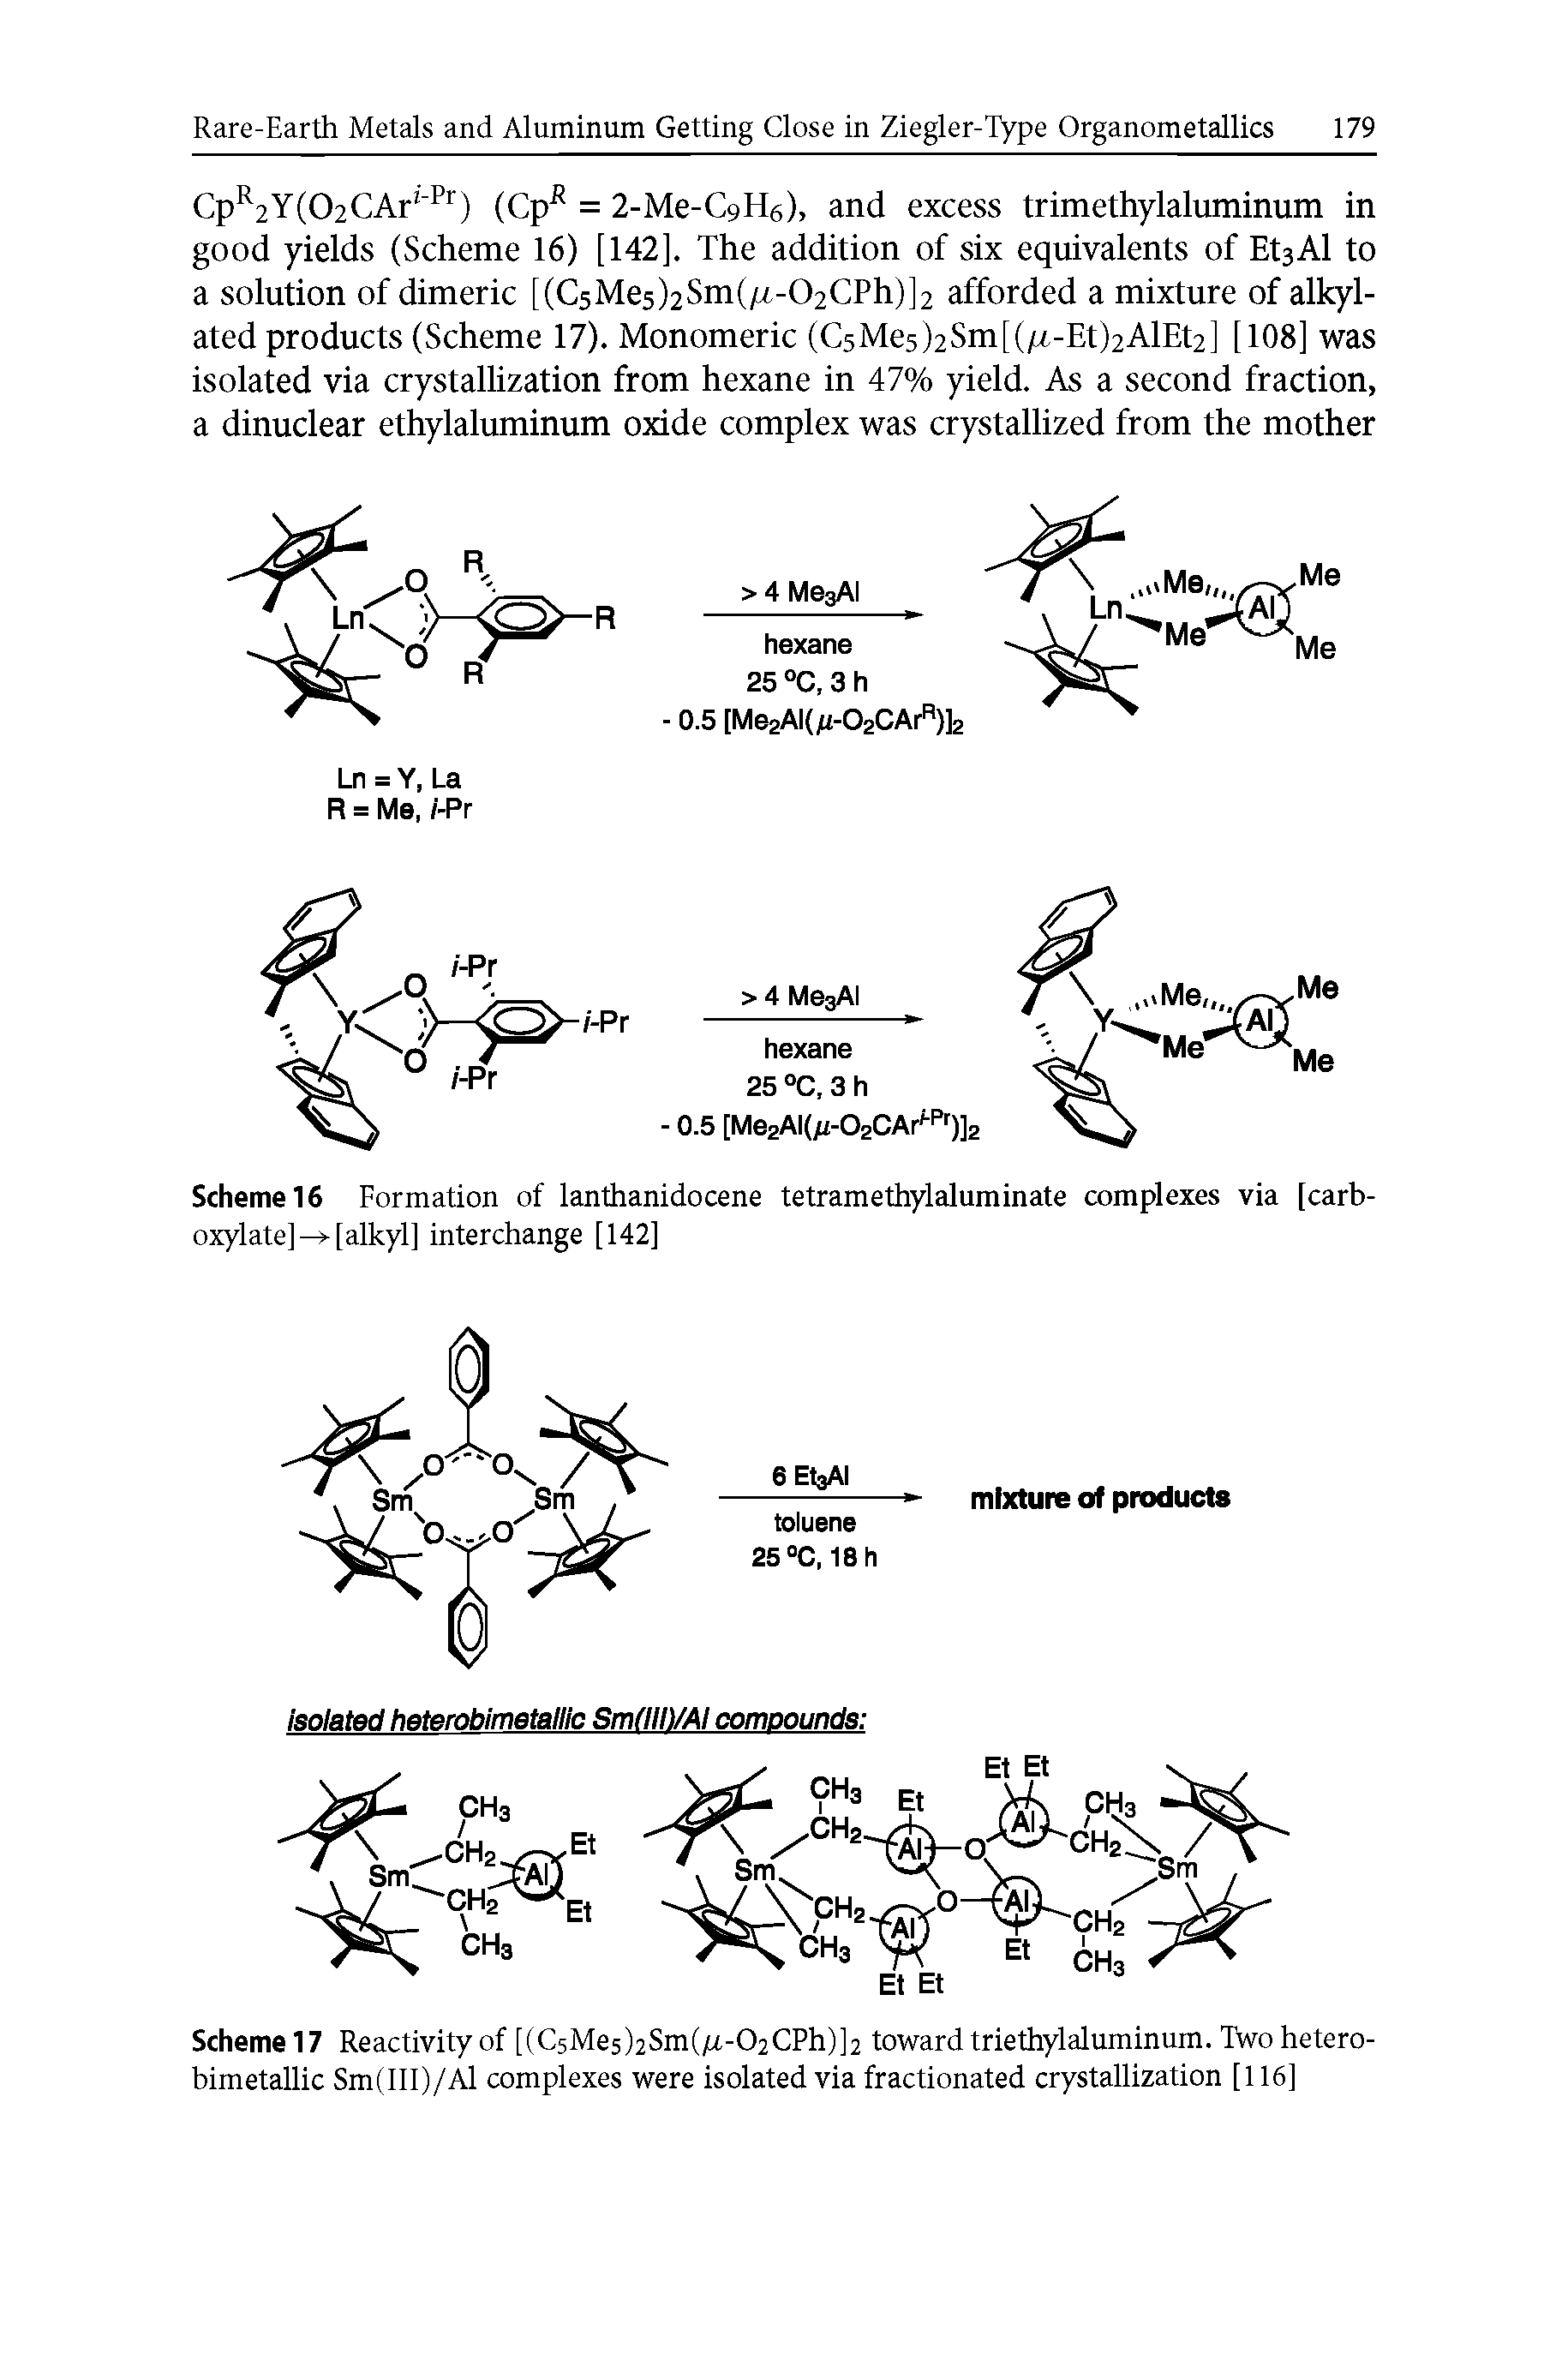 Scheme 17 Reactivity of [(CsMes Sm -ChCPhlh toward triethylaluminum. Two hetero-bimetallic Sm(III)/Al complexes were isolated via fractionated crystallization [116]...